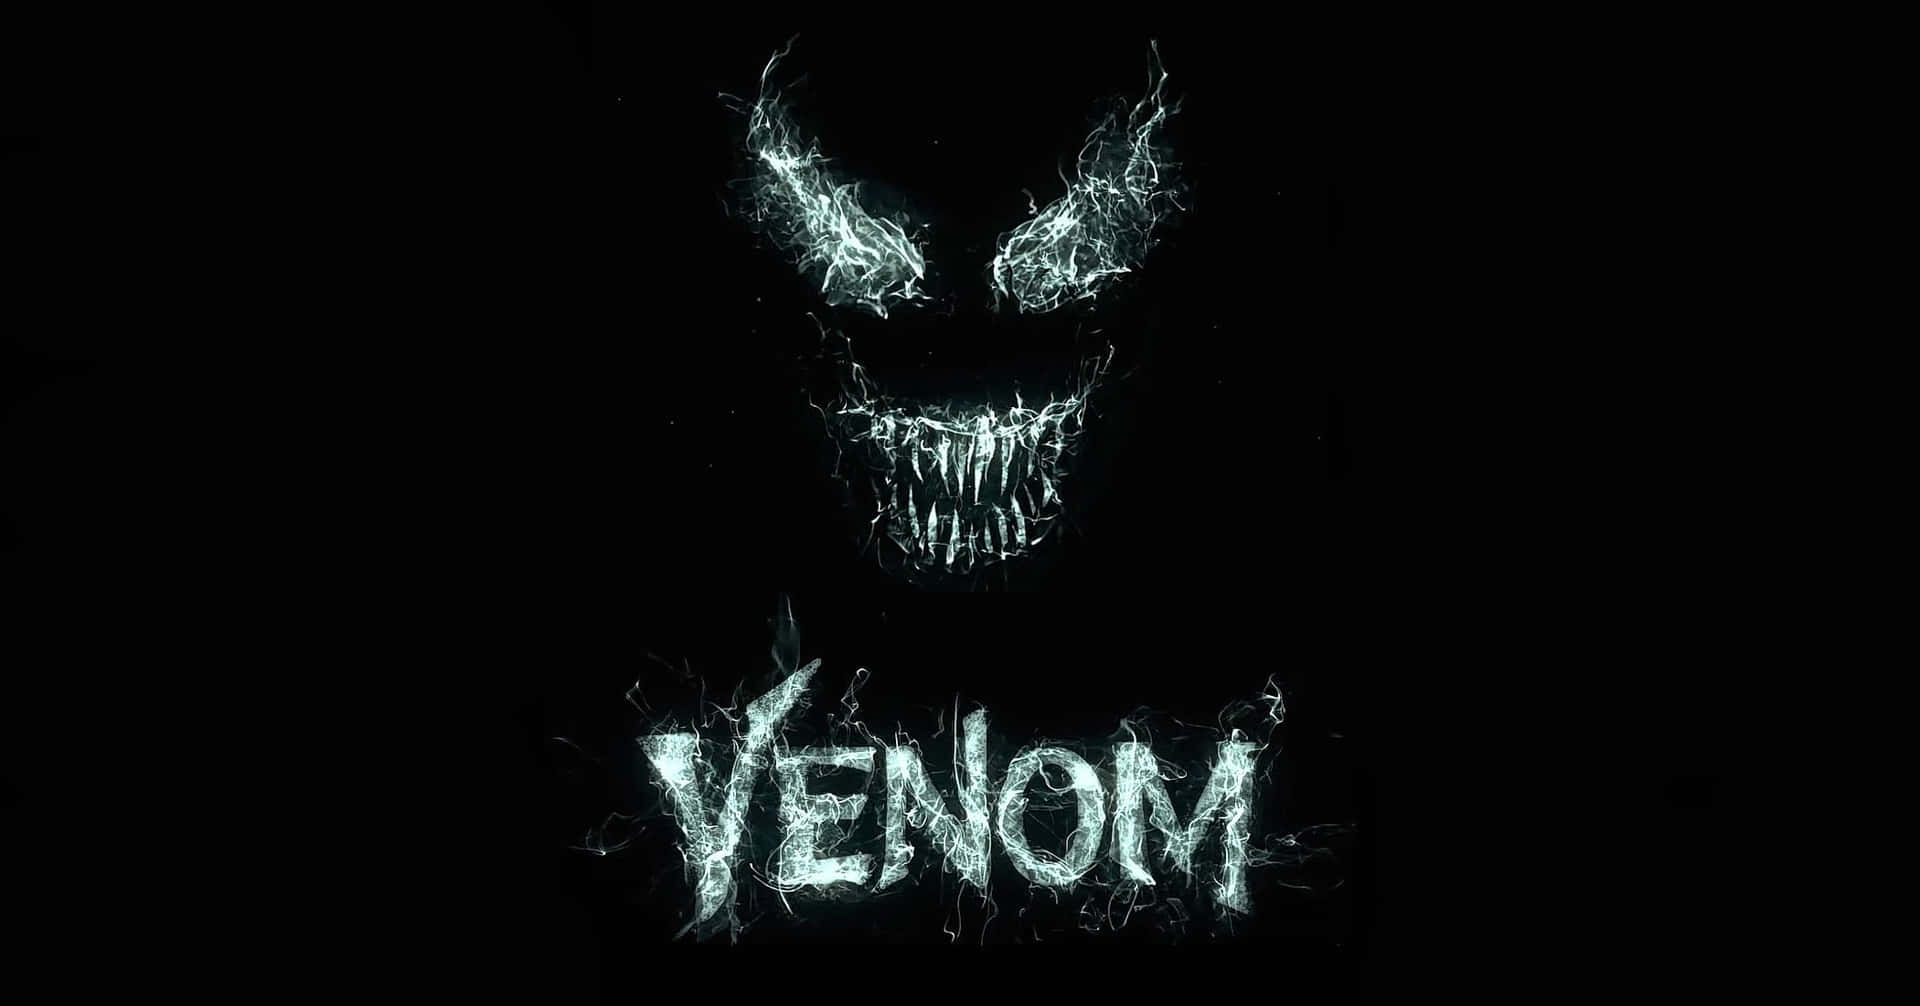 Get ready to unleash Black Venom! Wallpaper